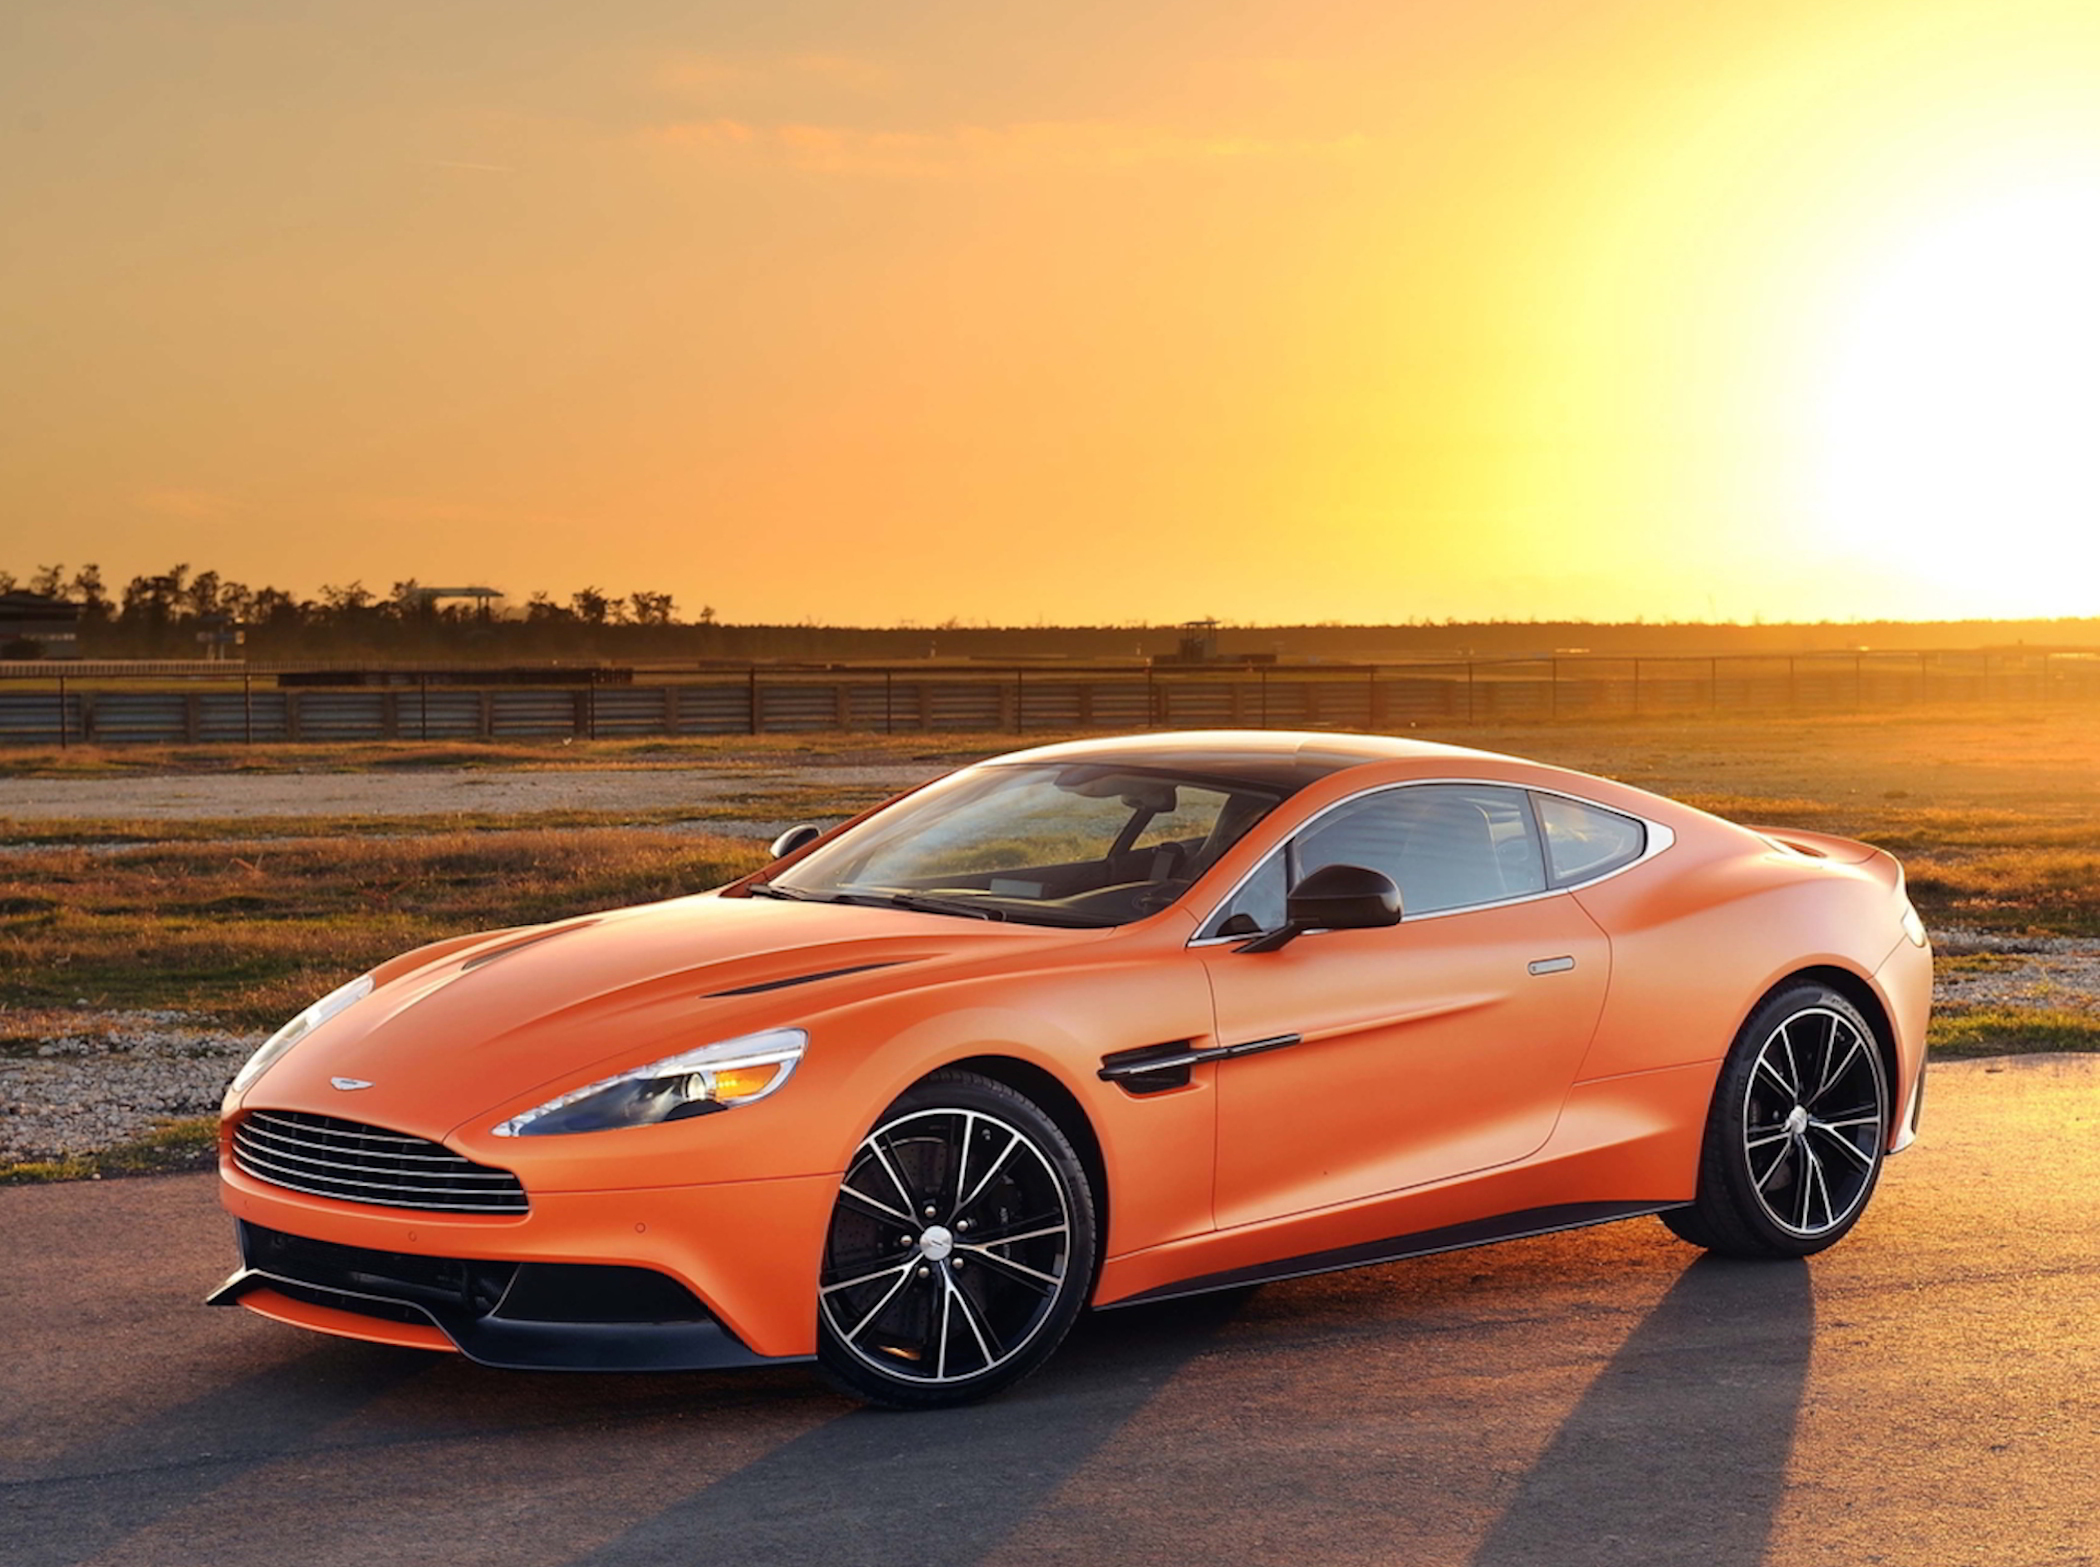 Aston Martin Vanquish Orange Wallpaper - Free Downloads